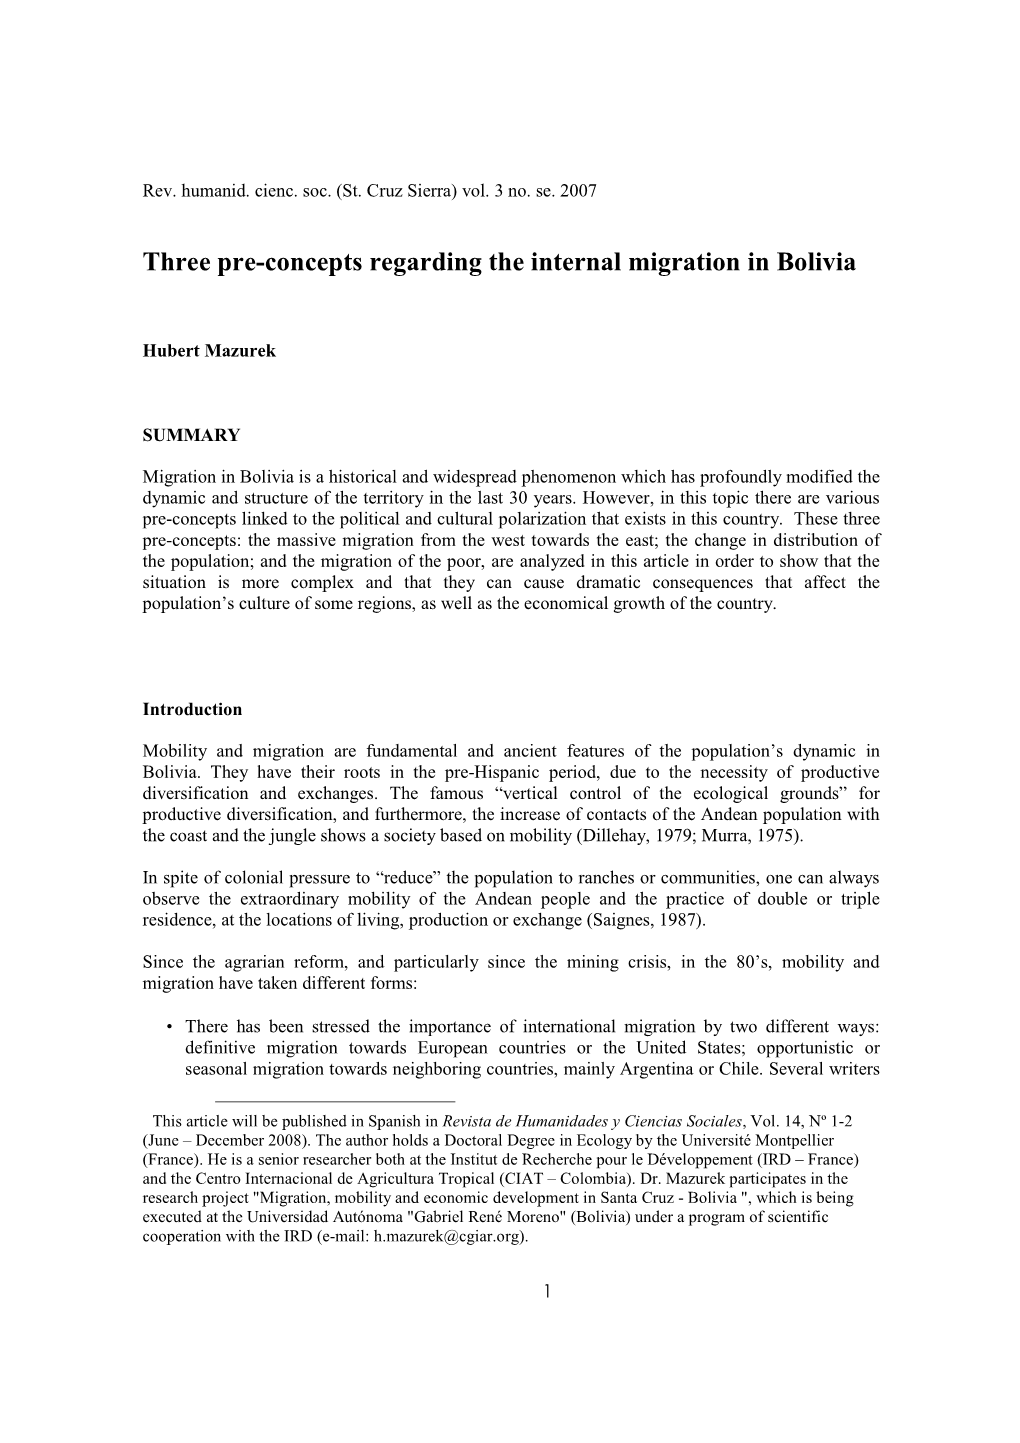 Three Pre-Concepts Regarding the Internal Migration in Bolivia